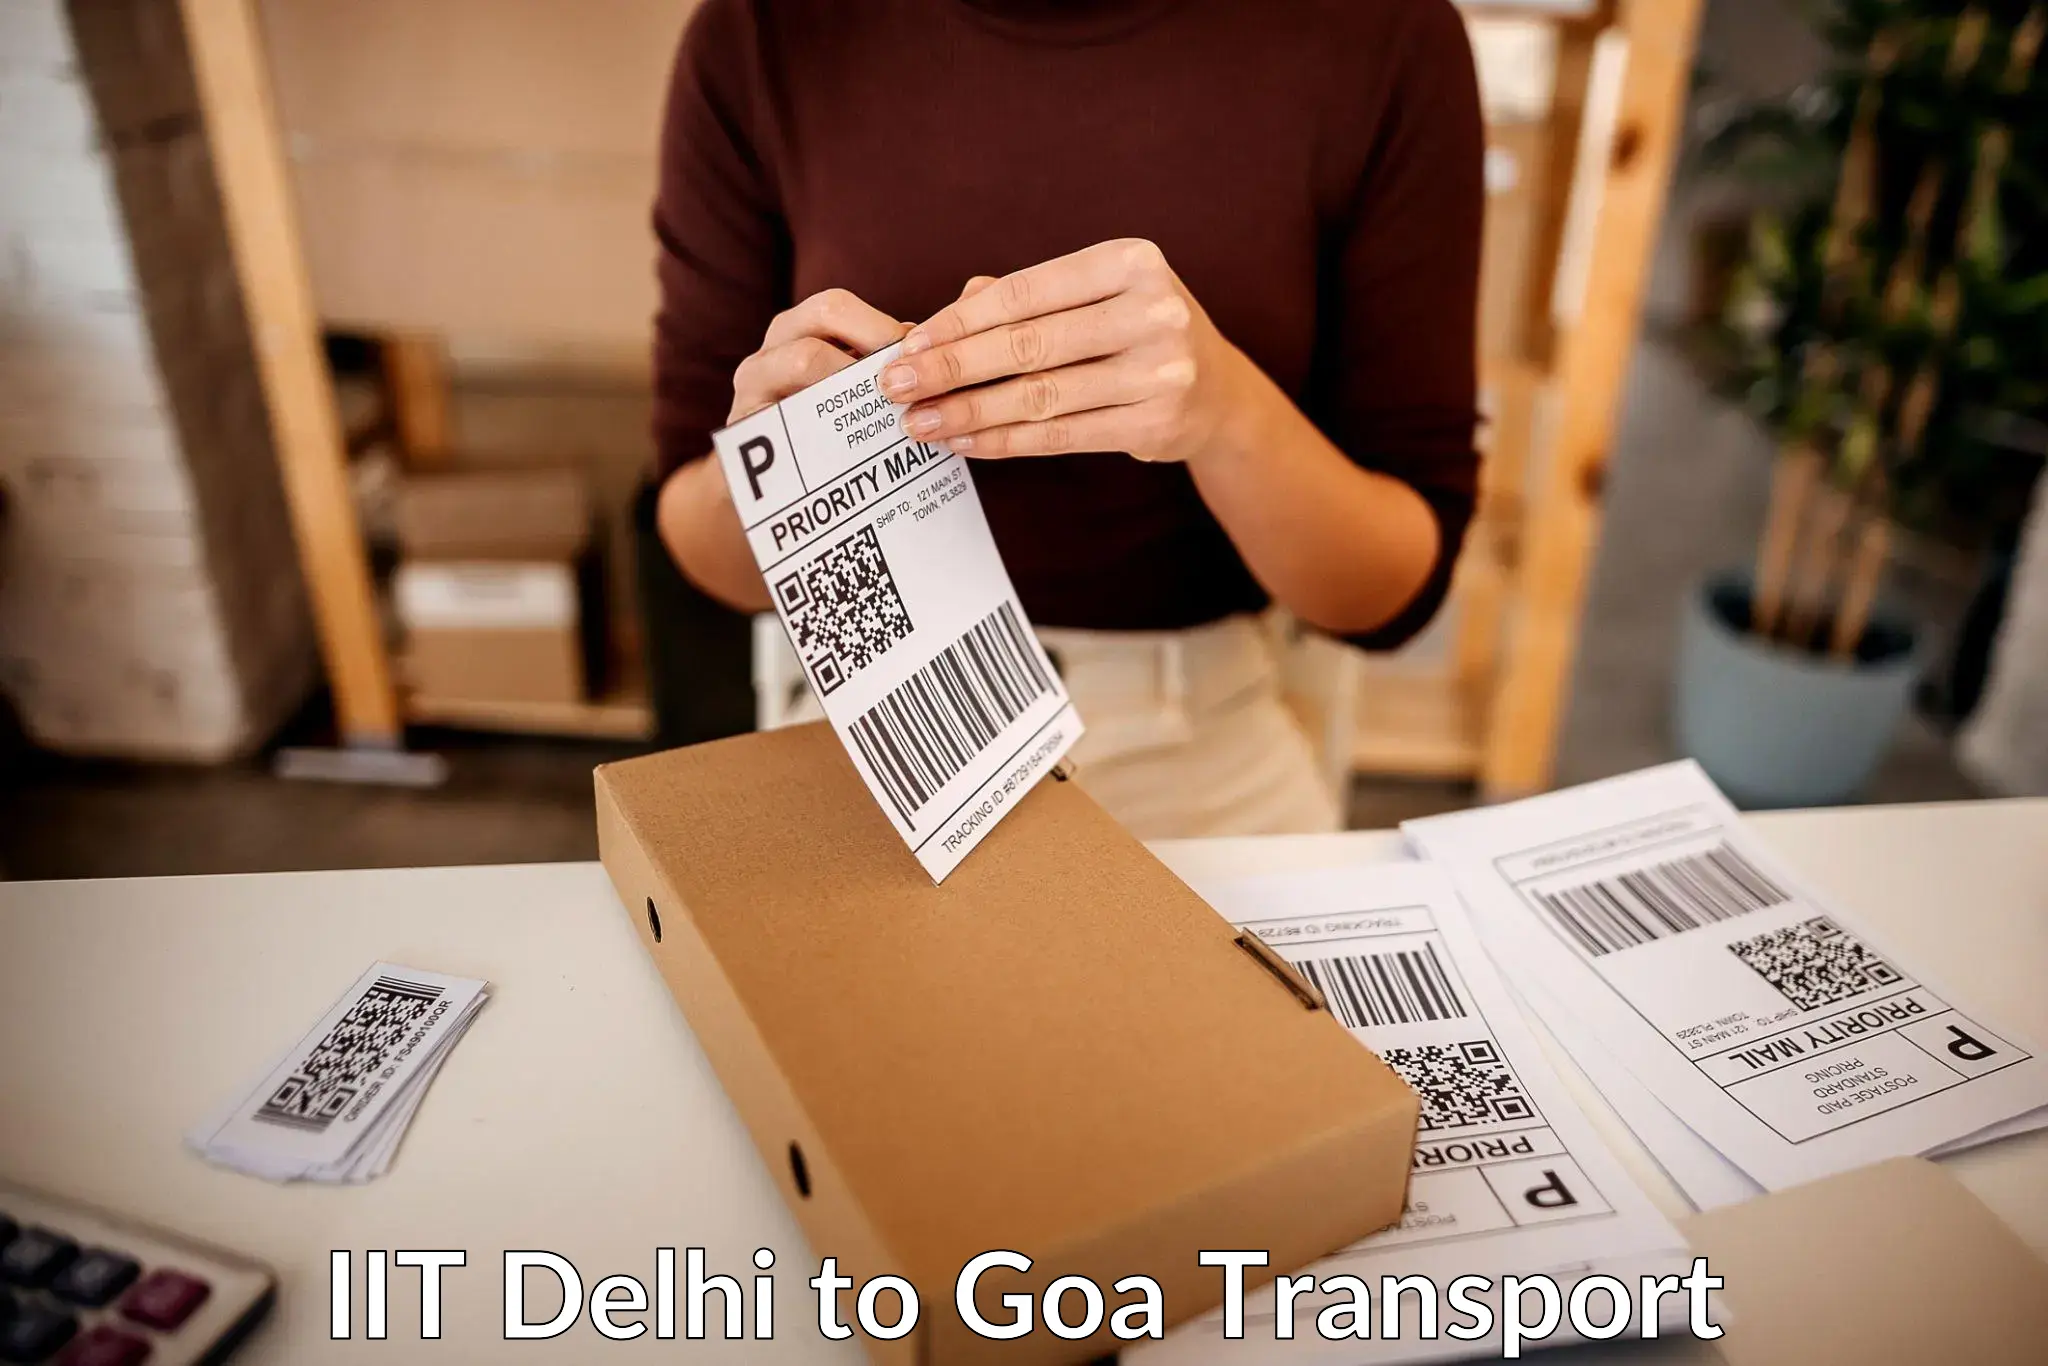 Online transport service IIT Delhi to Margao